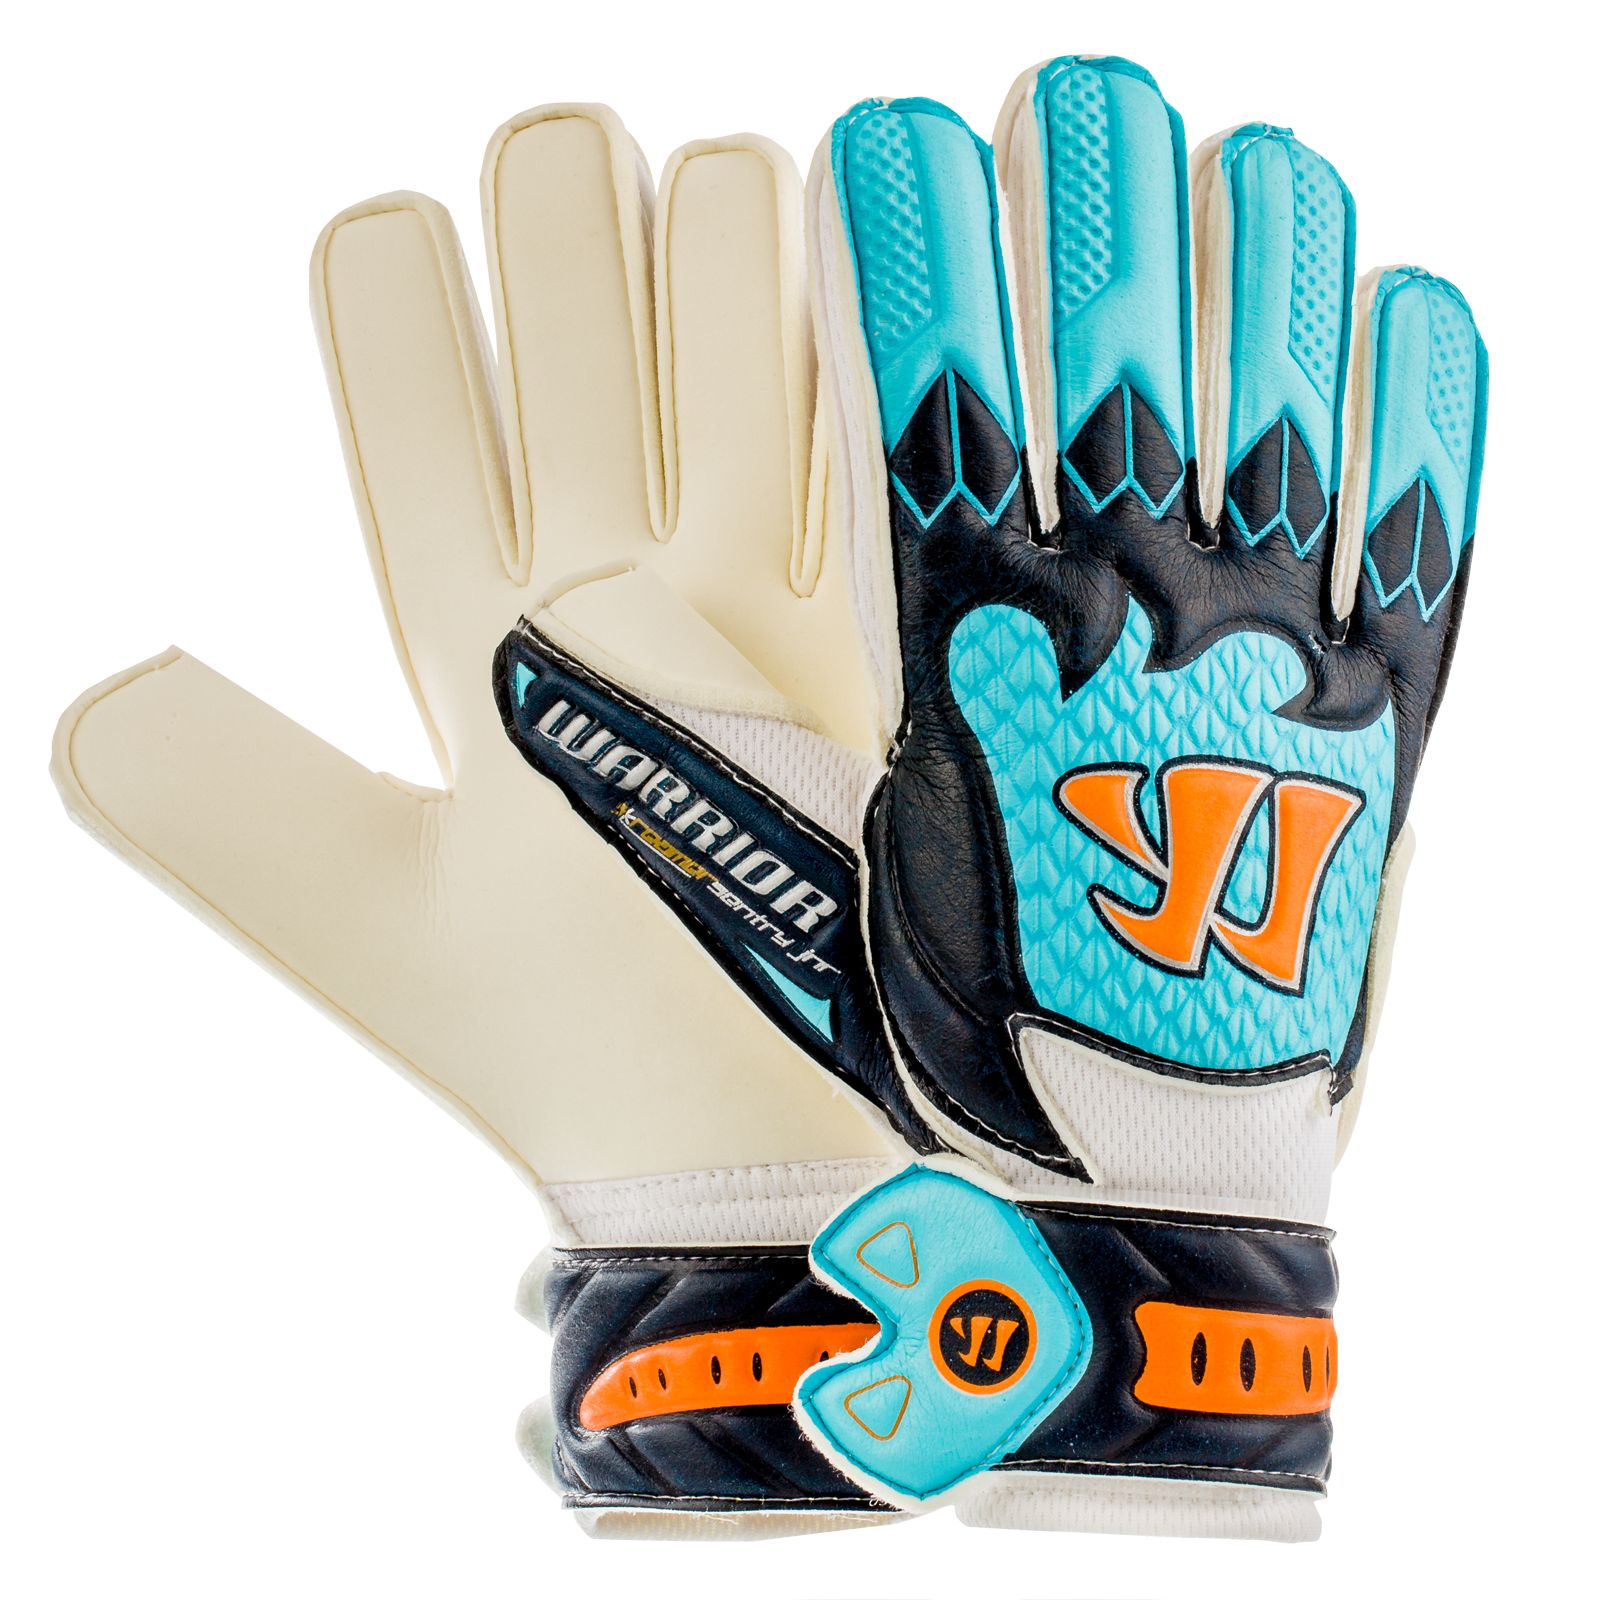 Skreamer Sentry Junior Goalkeeper Gloves, White with Blue Radiance & Insignia Blue image number 1